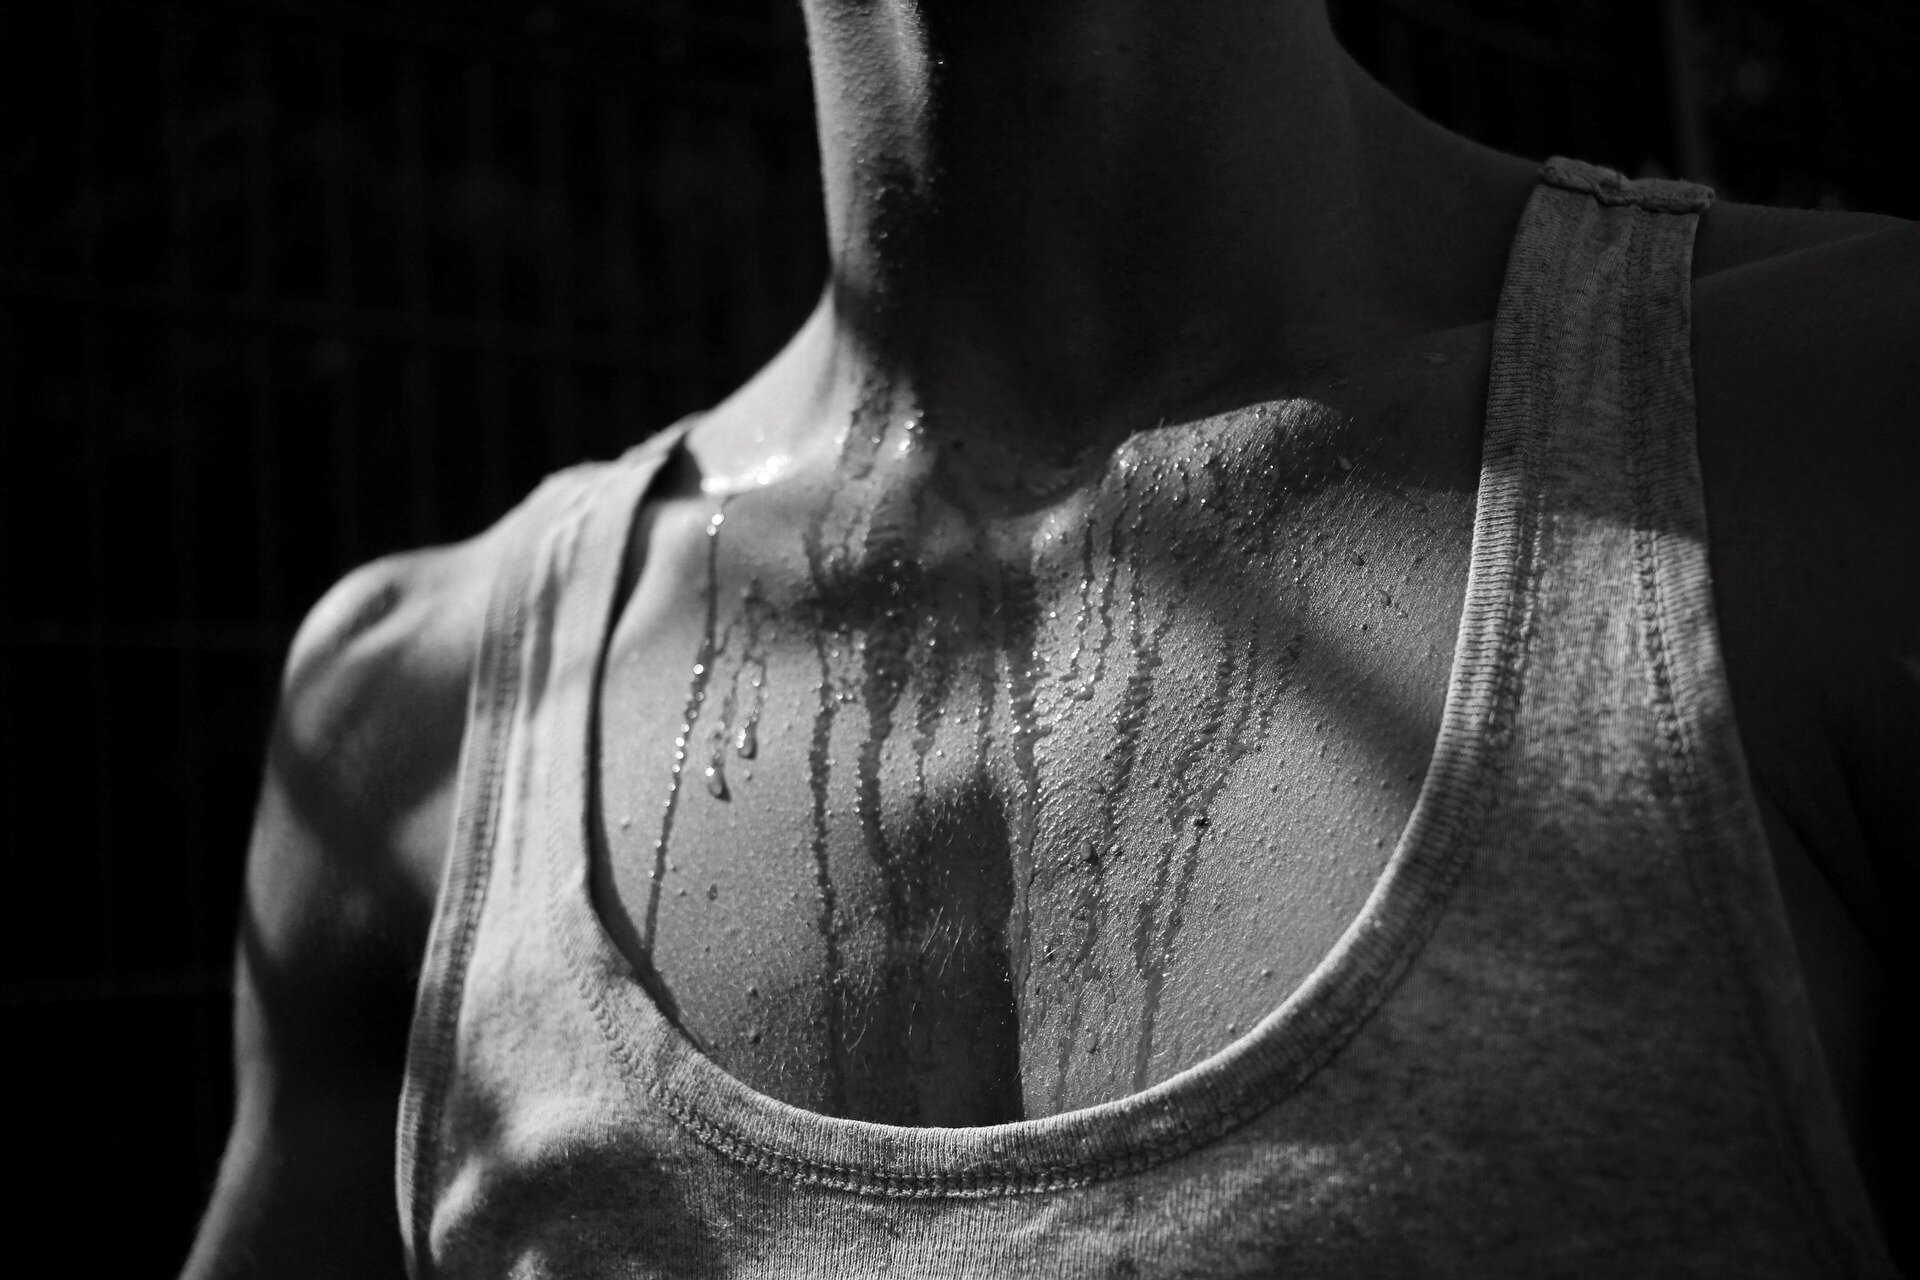 #’Smart necklace’ biosensor may track health status through sweat